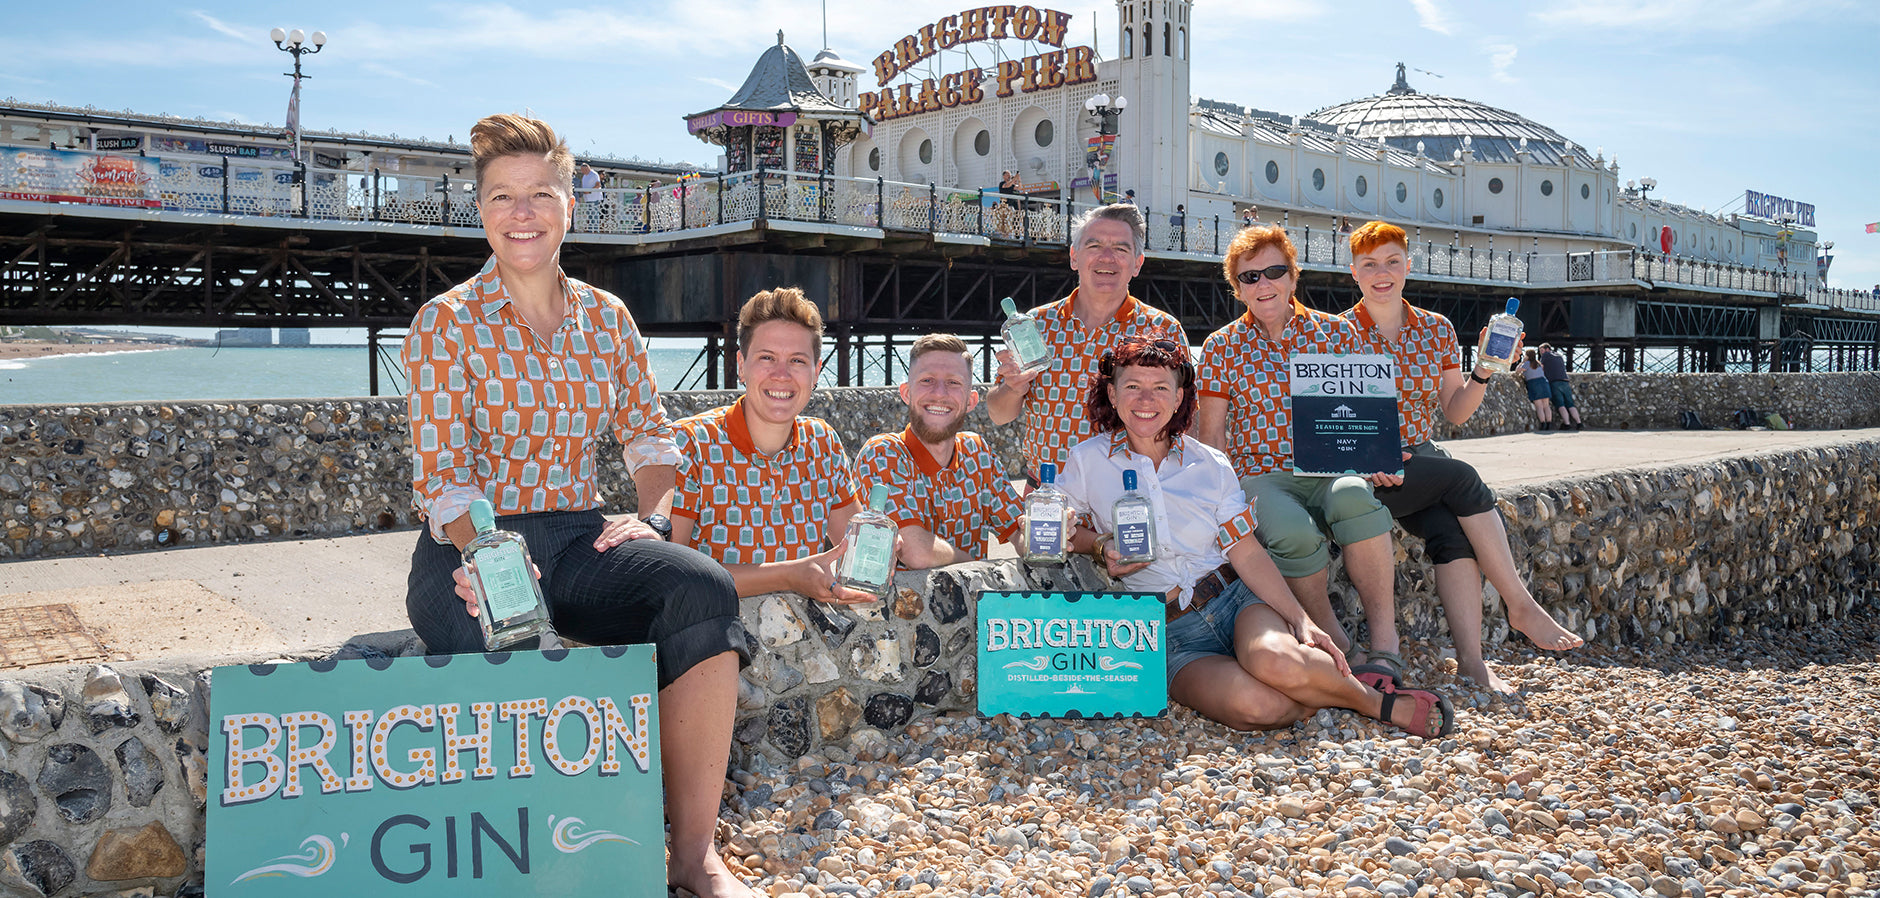 Award winning Brighton Gin's team by Brighton pier